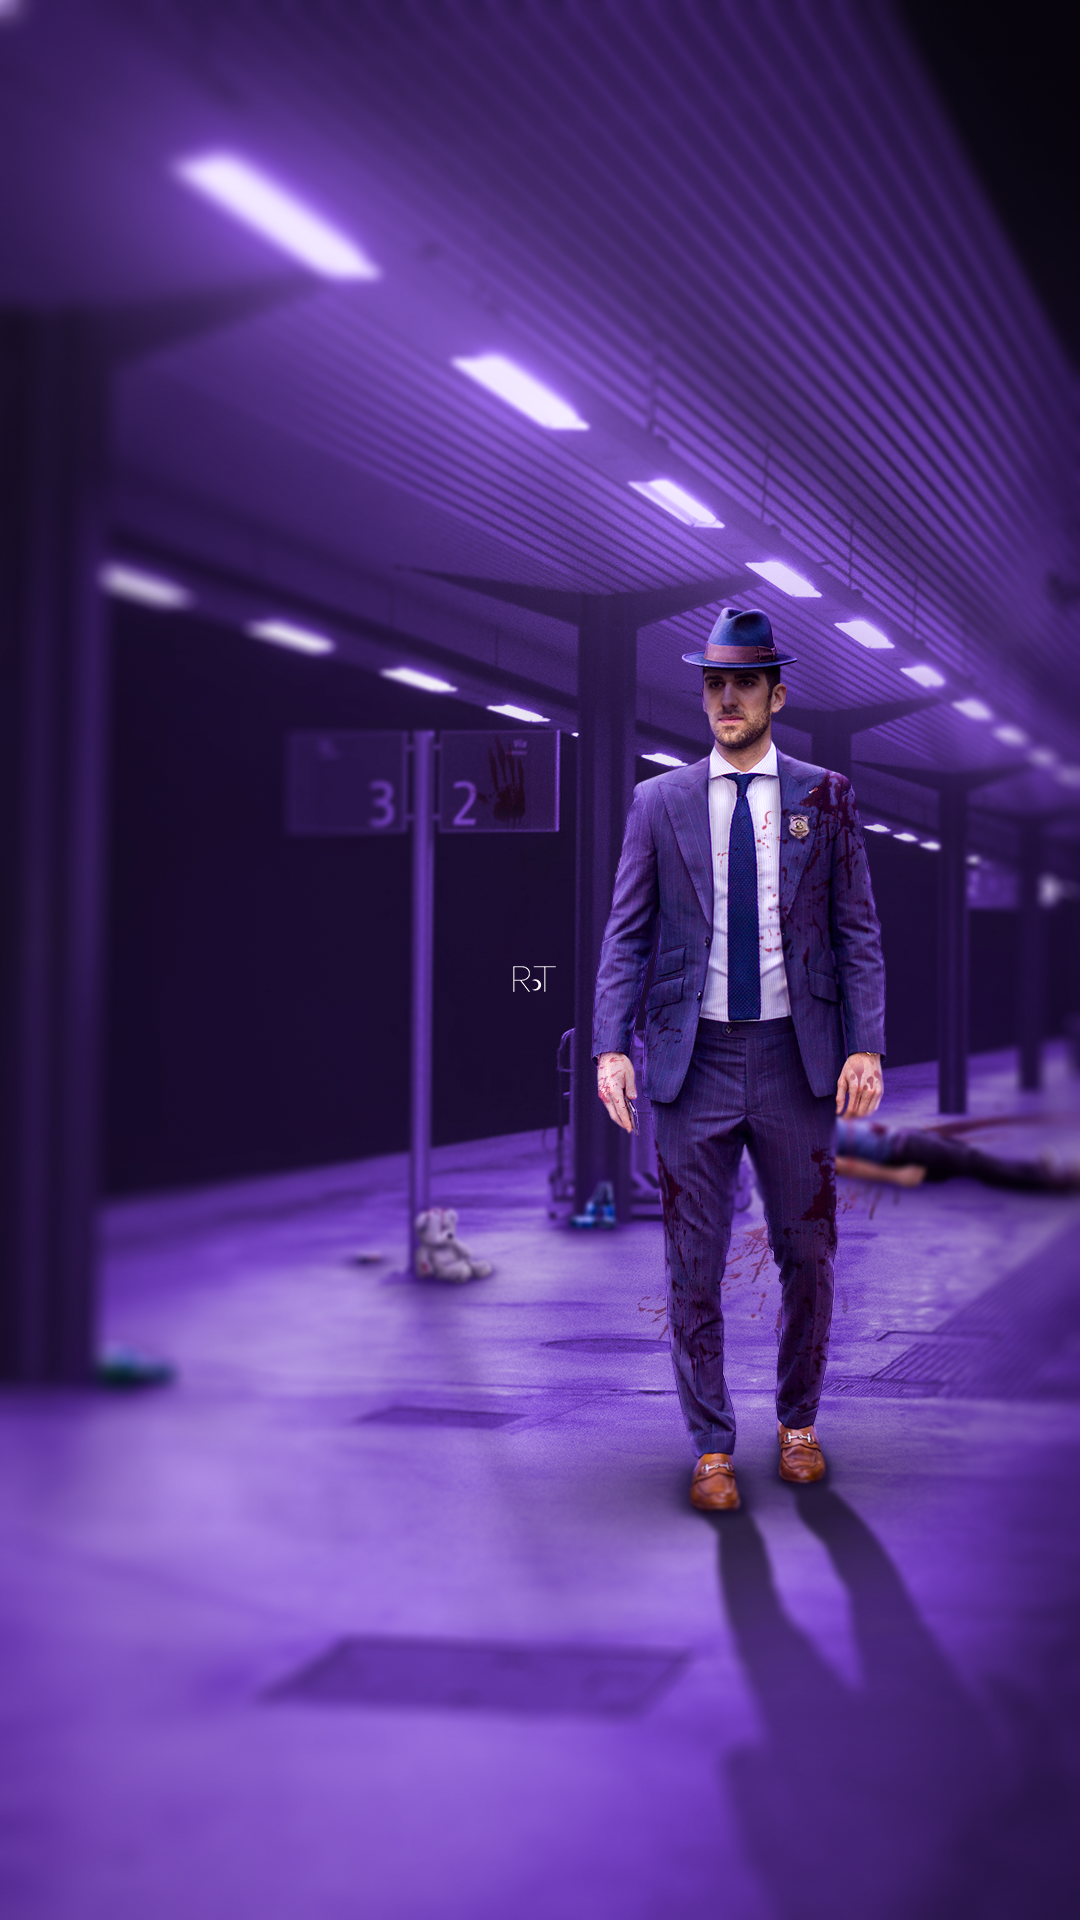 Purple Guy by rotdesign_